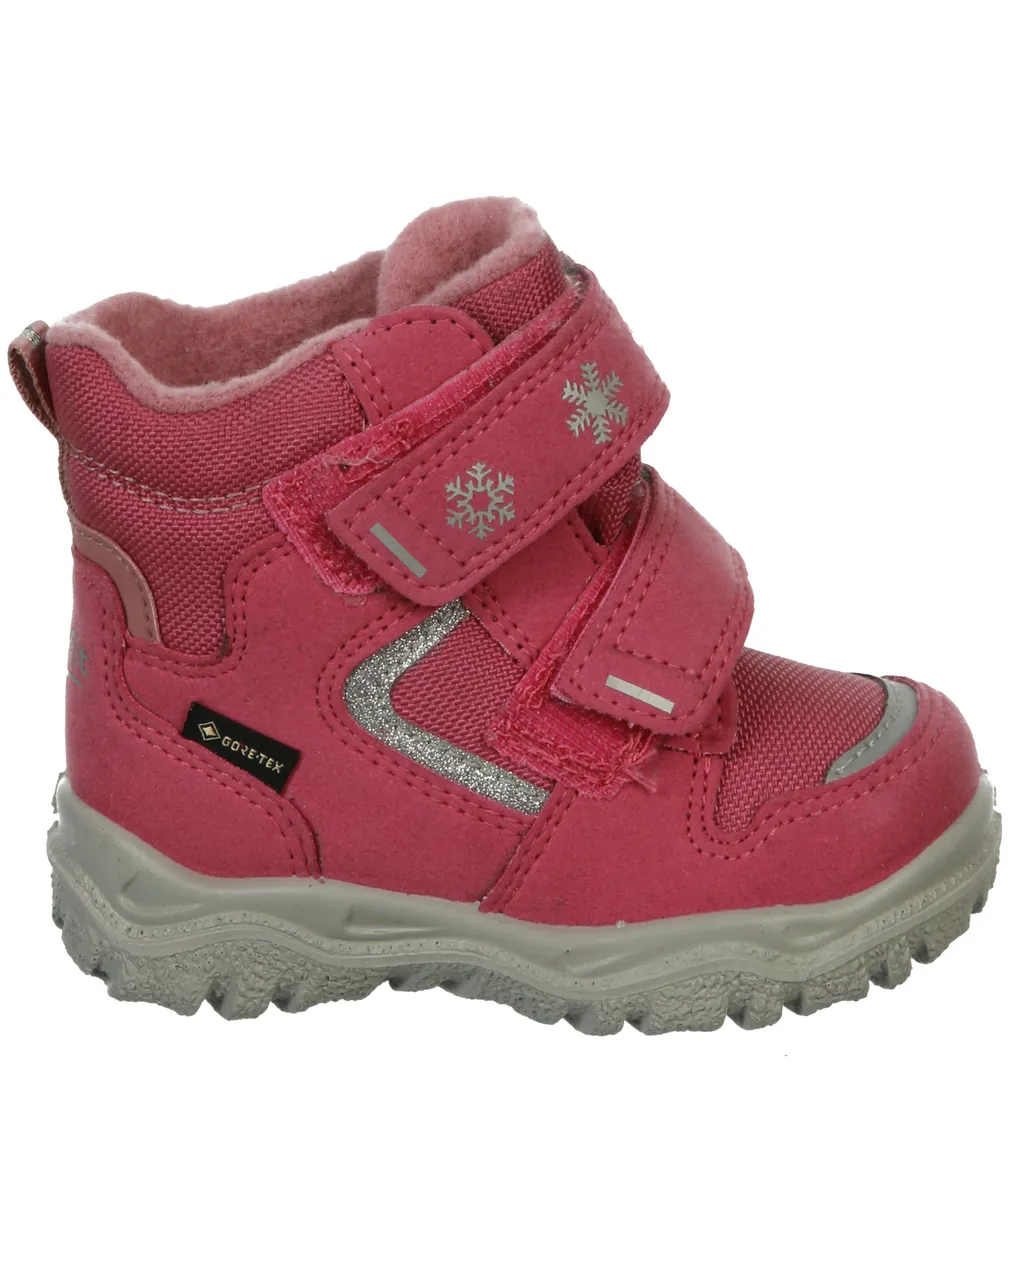 Klett-Boots HUSKY1 in pink/rosa